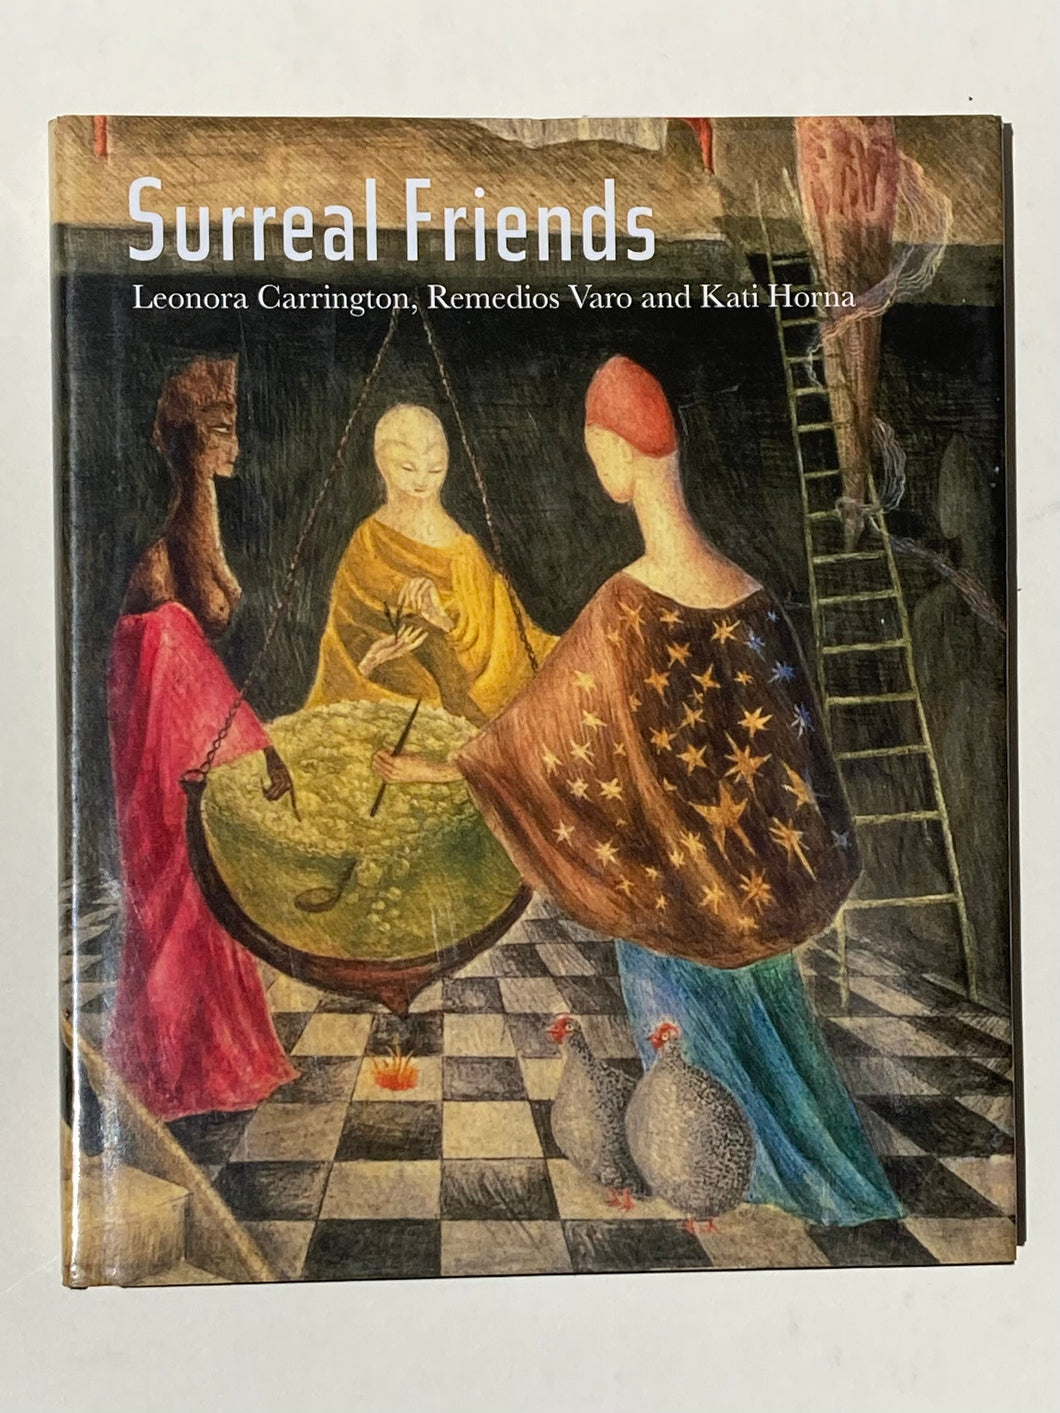 Surreal Friends: Leonora Carrington, Remedios Varo and Katie Horna